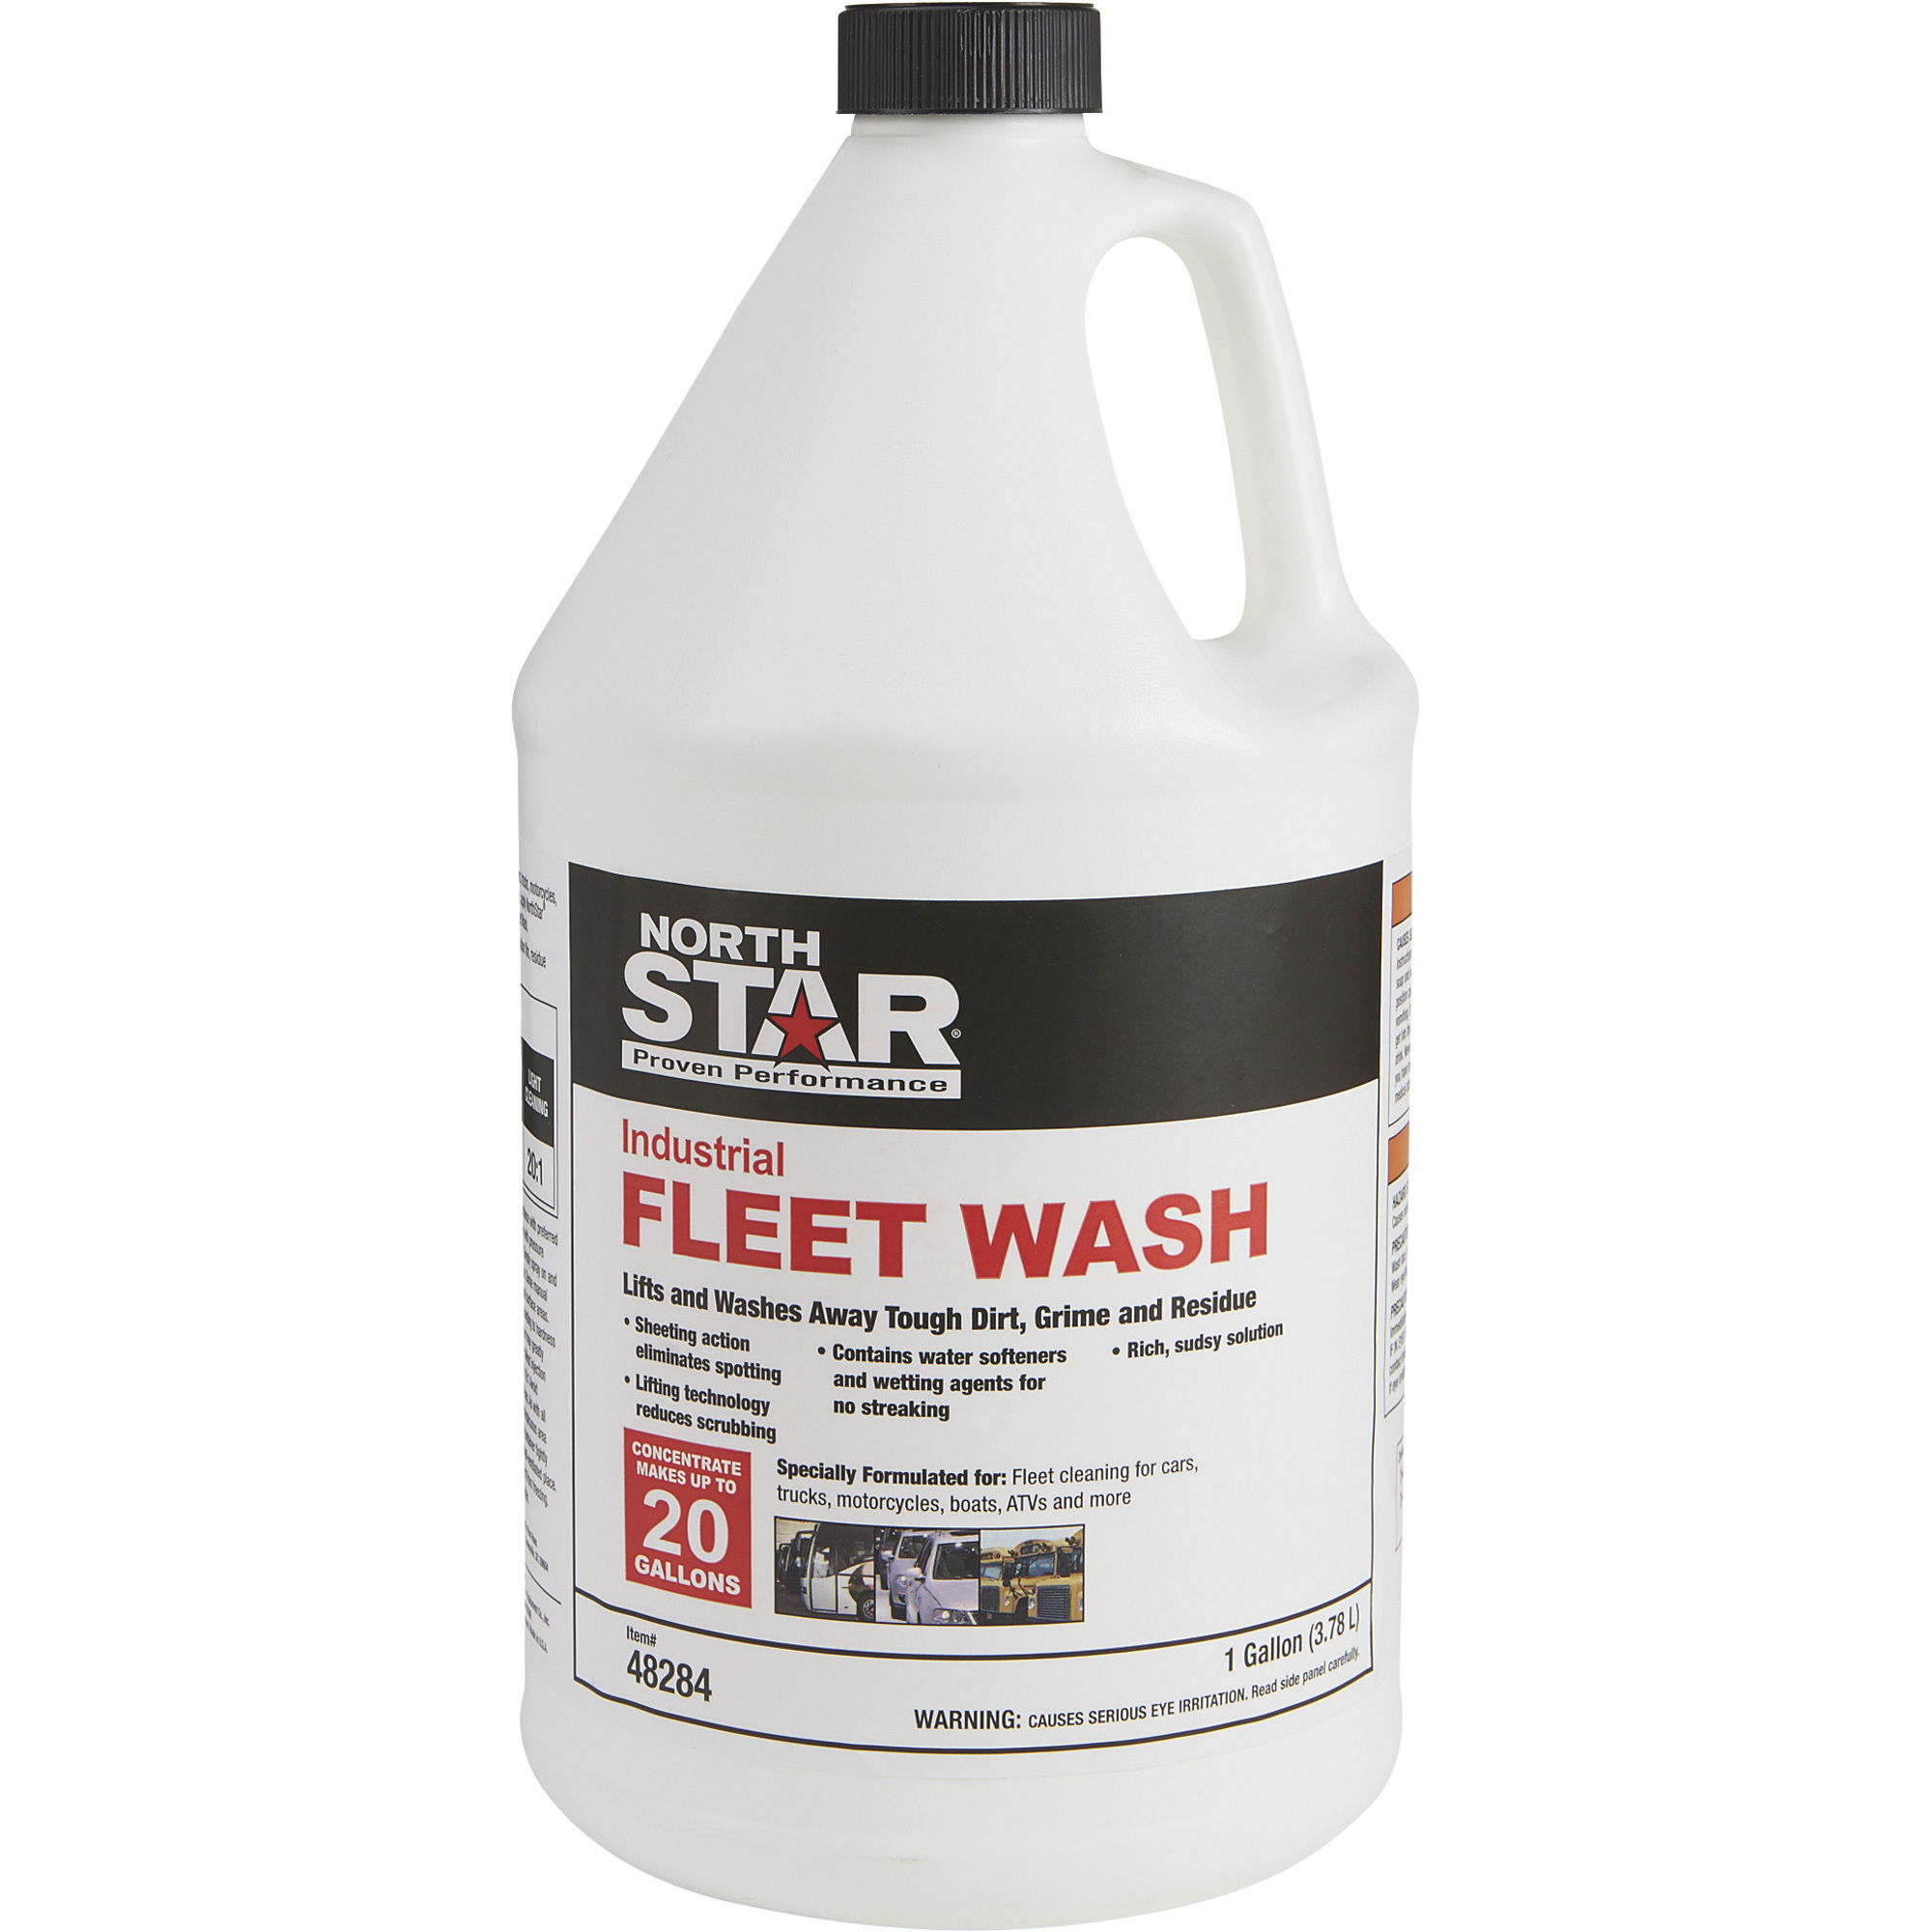 NorthStar Pressure Washer High-Performance Fleet Wash Concentrate â 1-Gallon, Model NSFW1